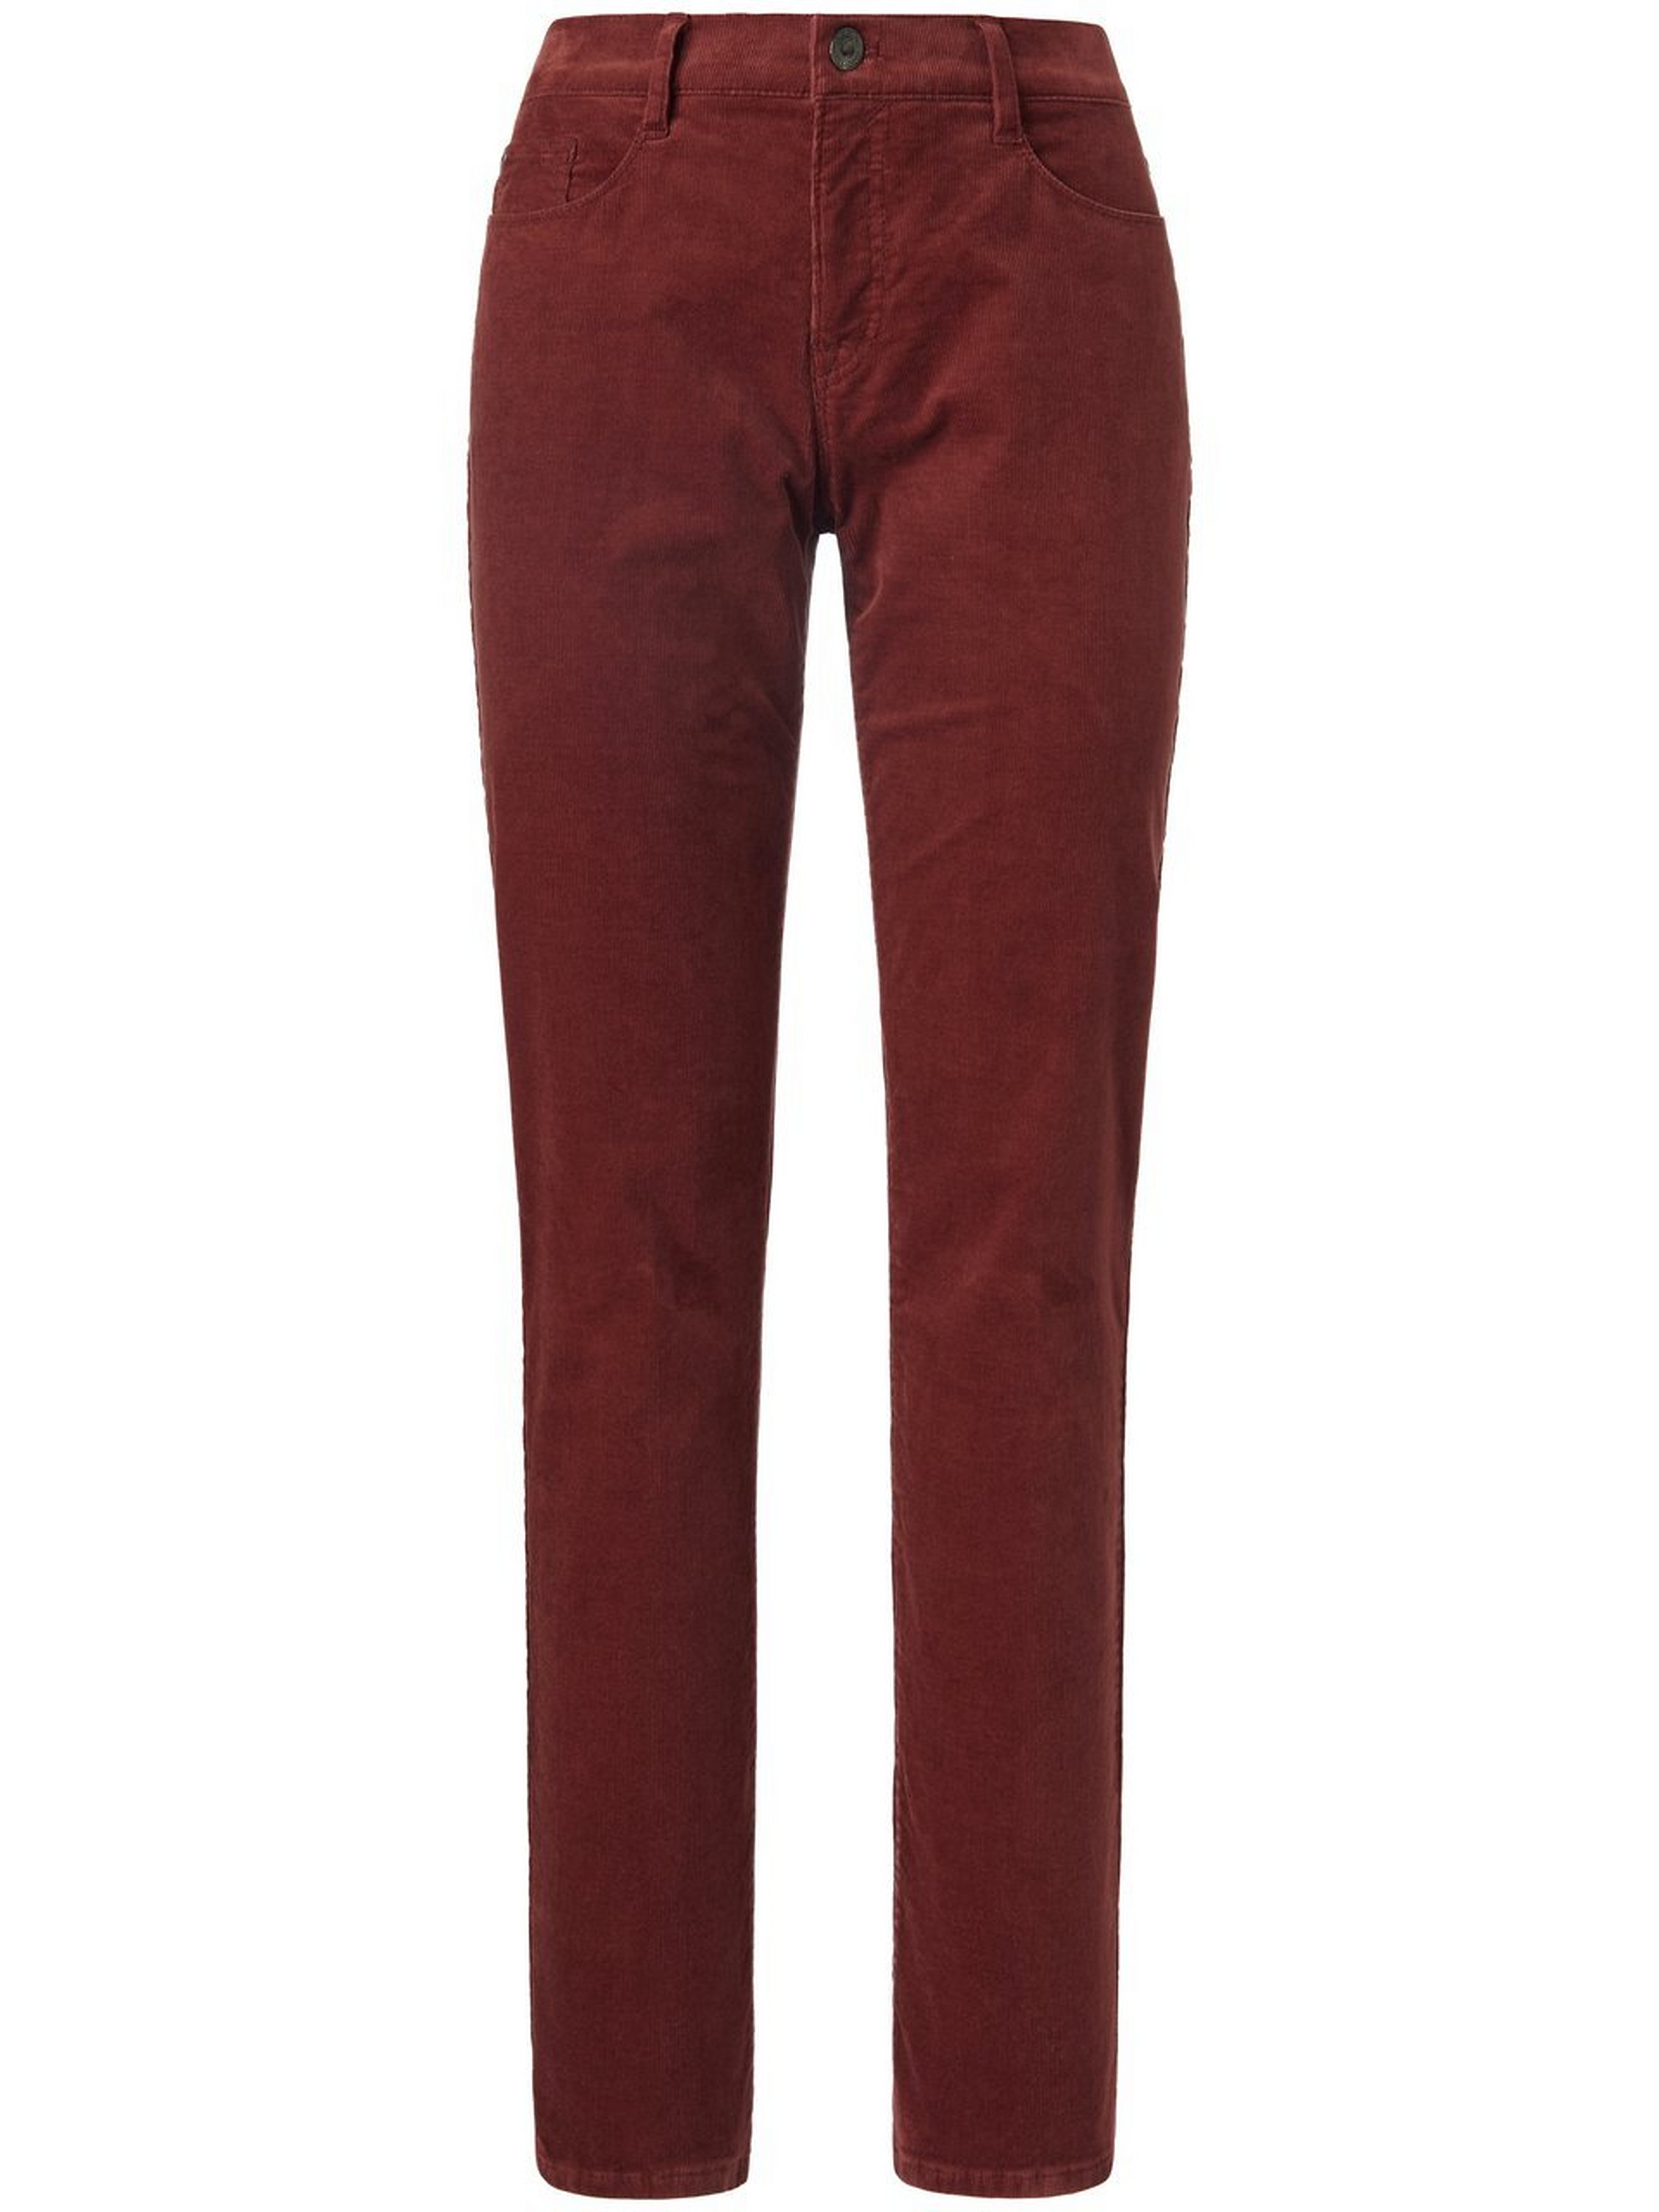 Le pantalon en velours Feminine Fit modèle Carola  Brax Feel Good rouge